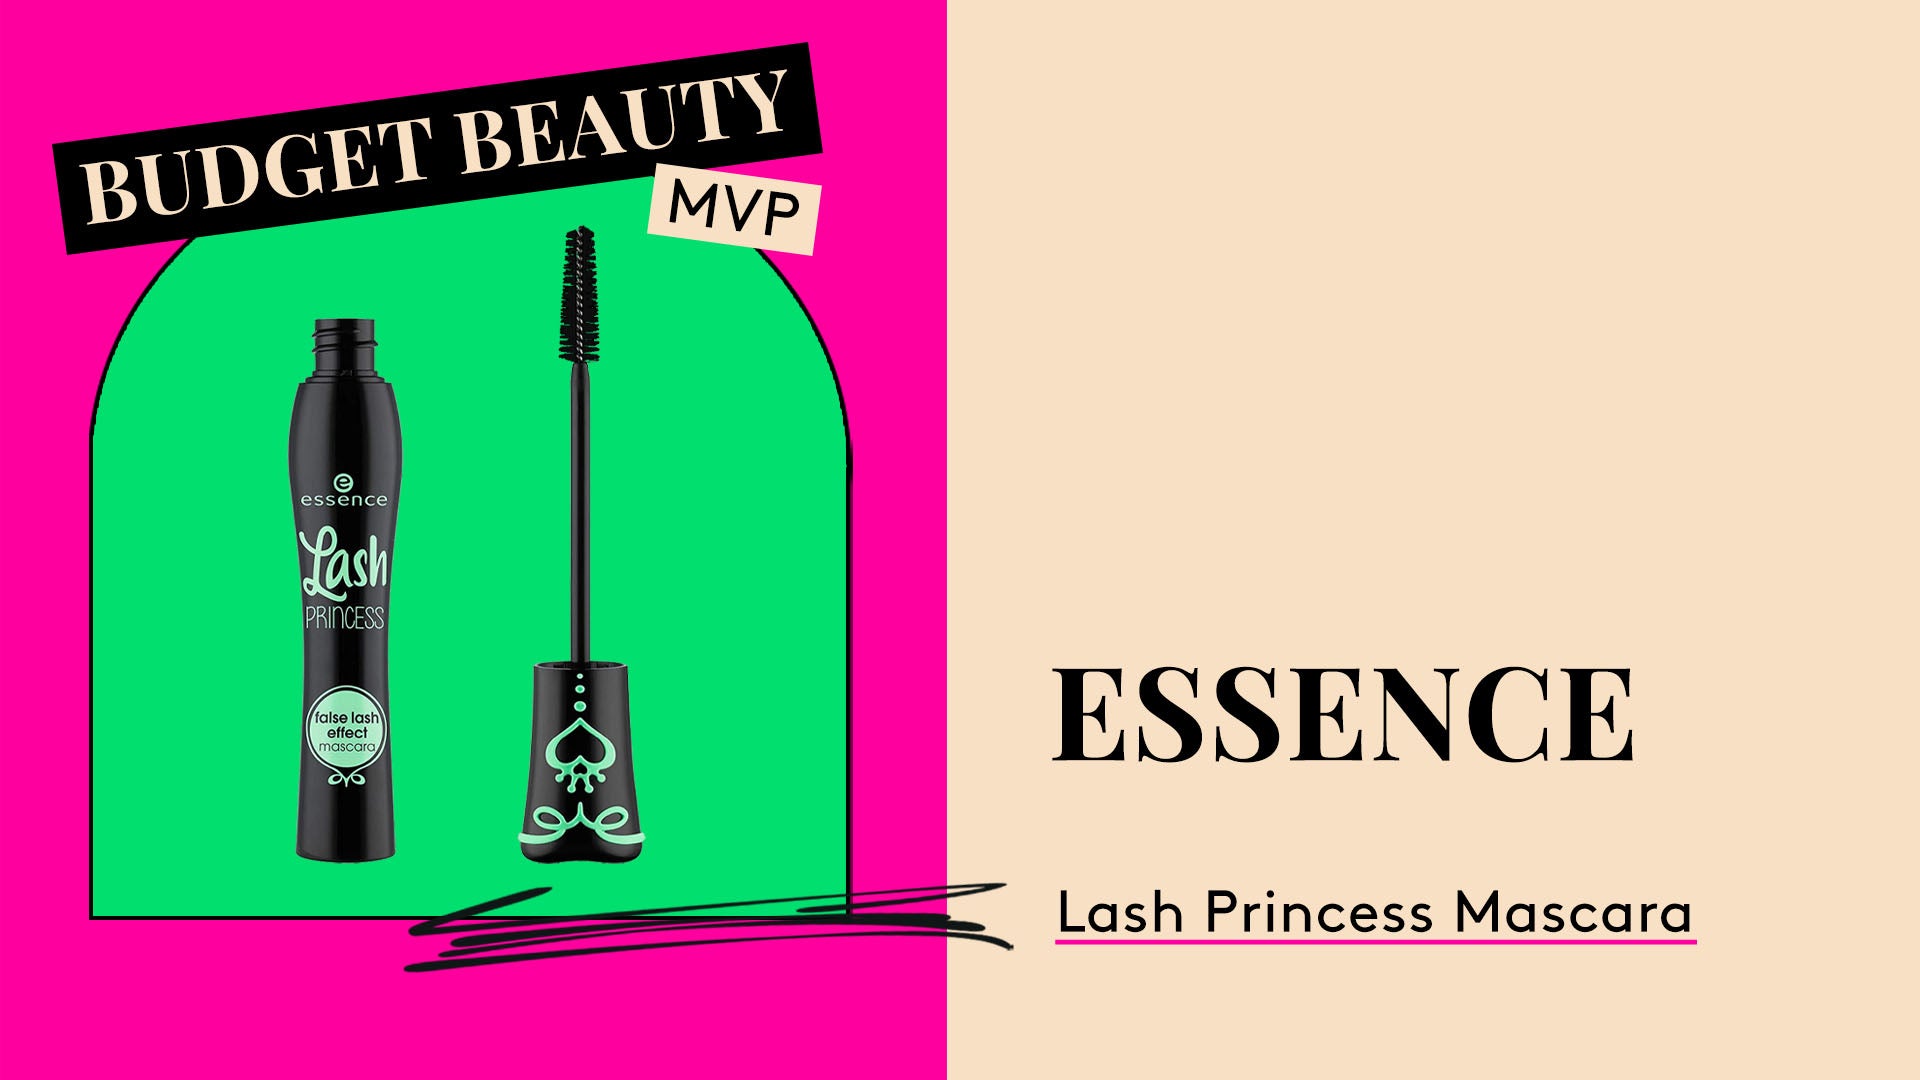 Budget Beauty MVP. Essence Lash Princess Mascara.